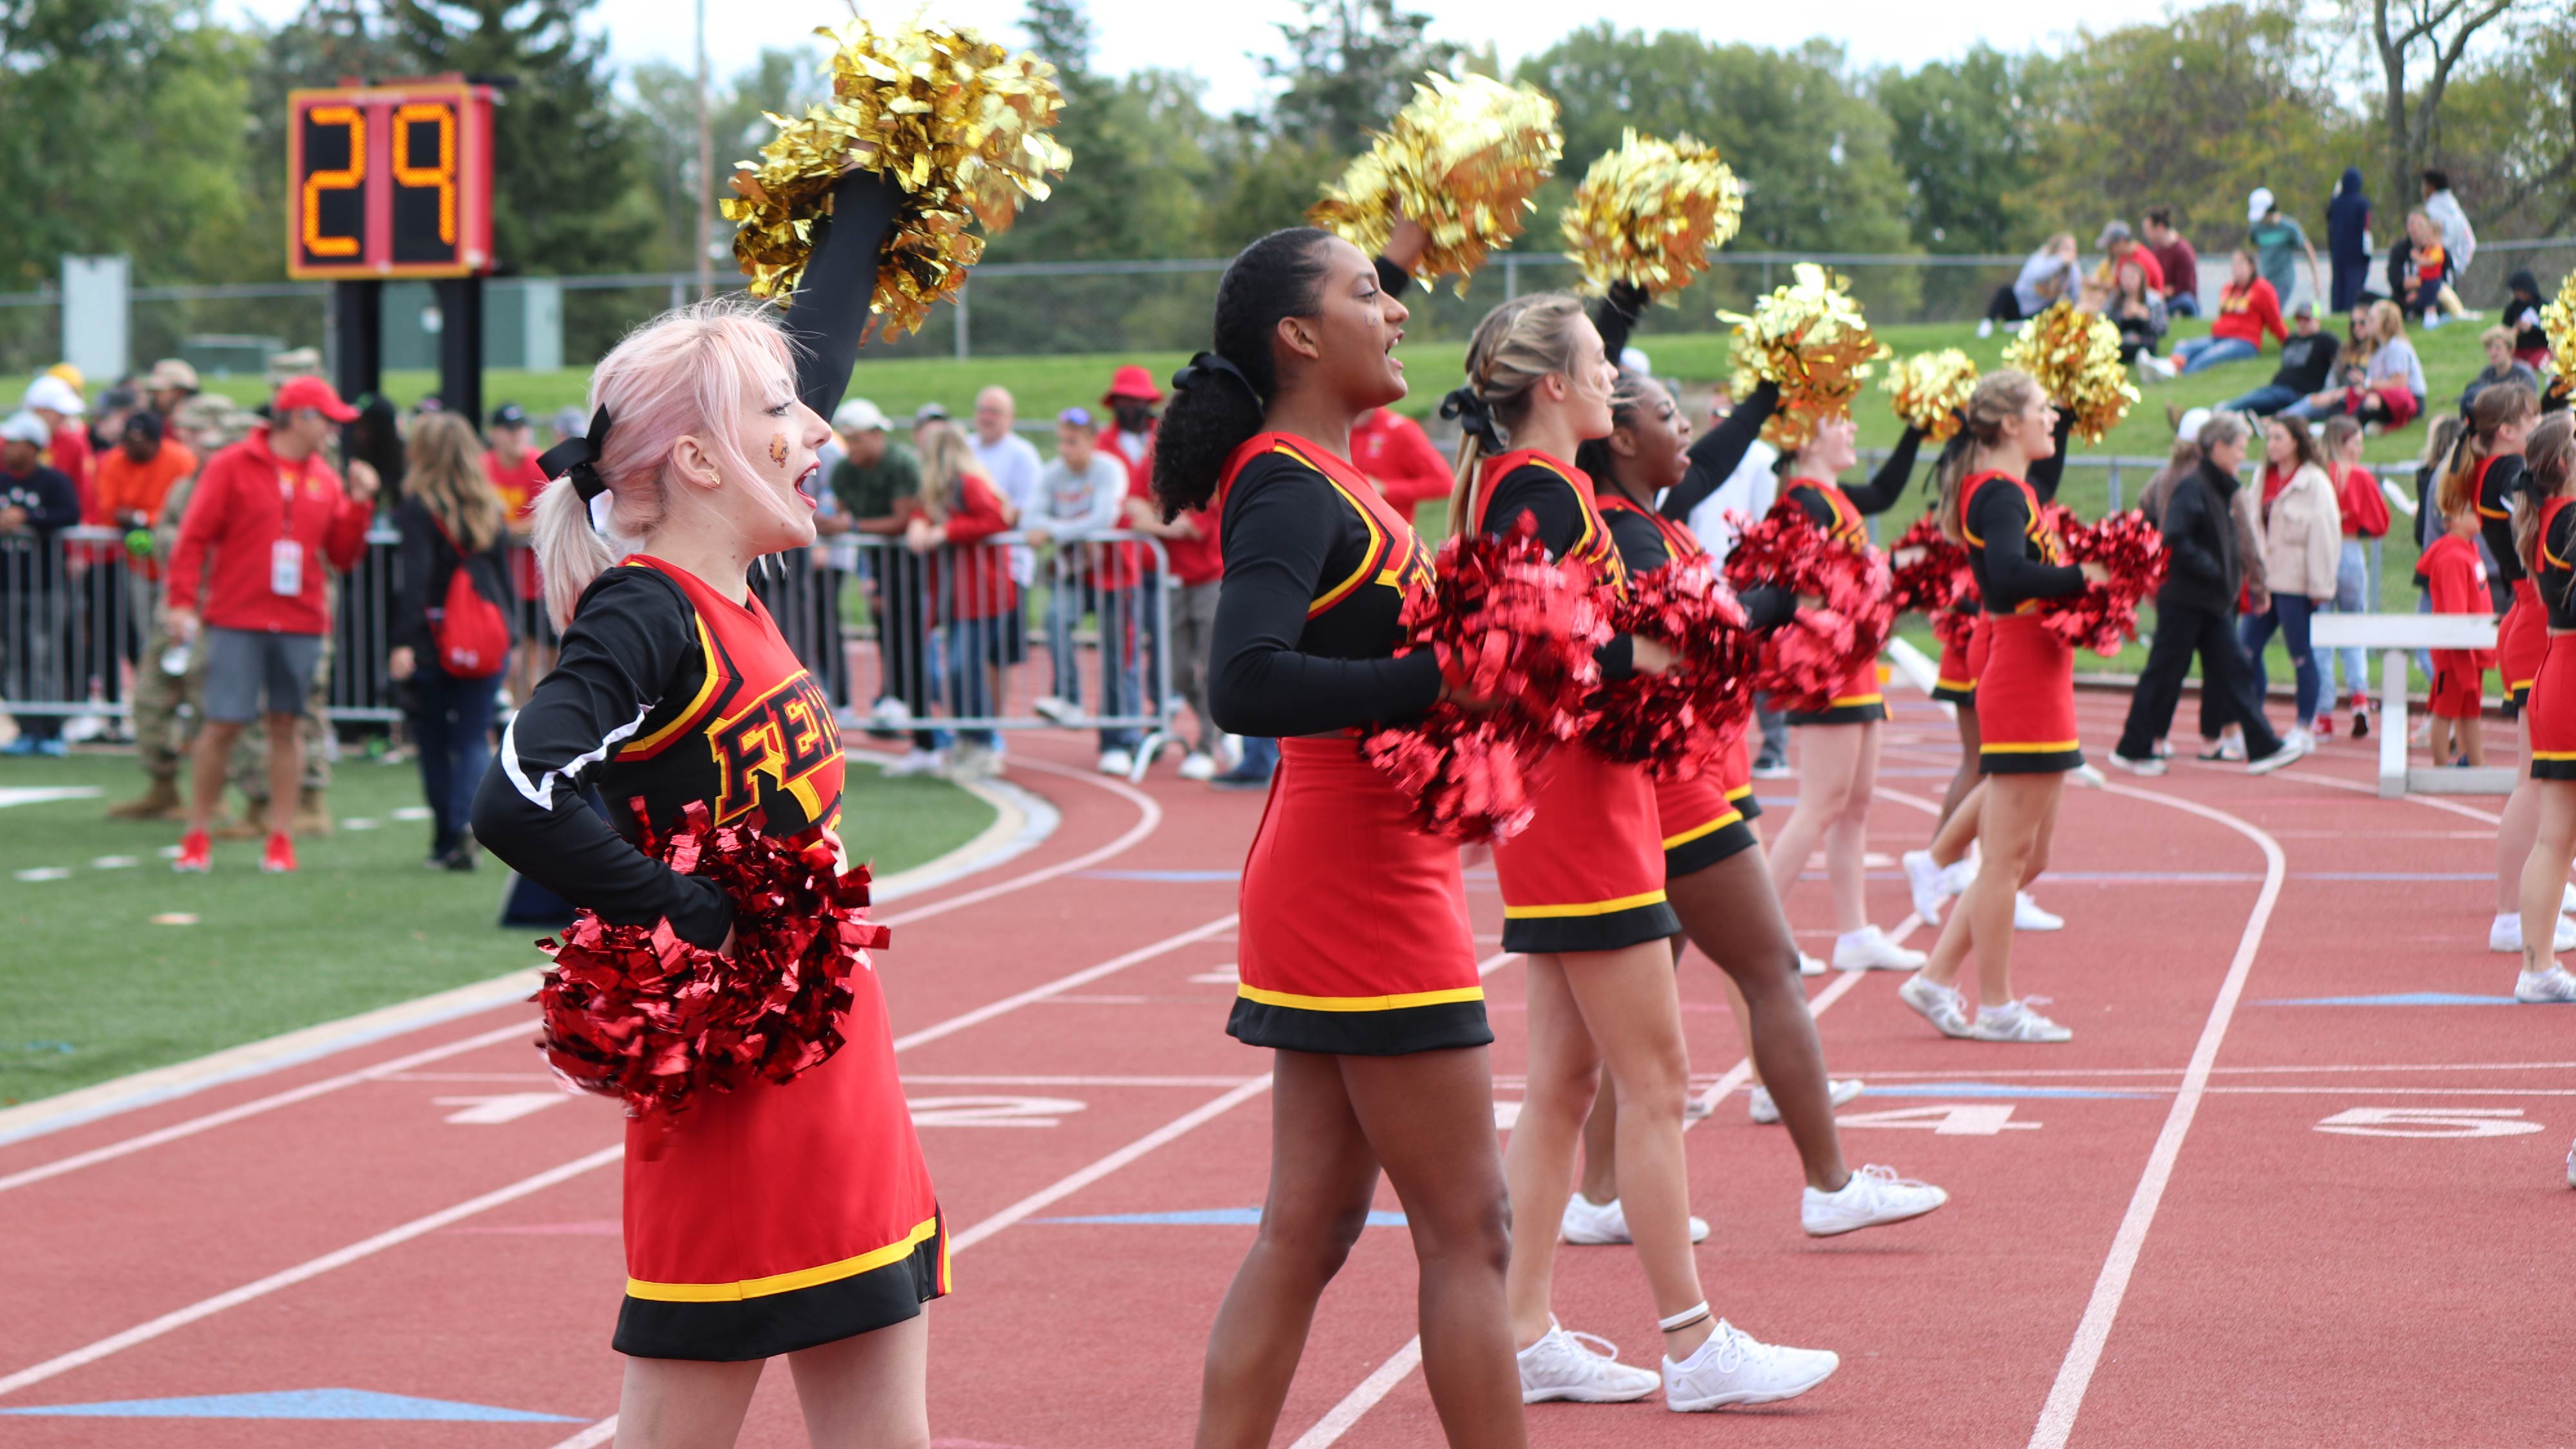 Cheerleaders on sideline at Ferris